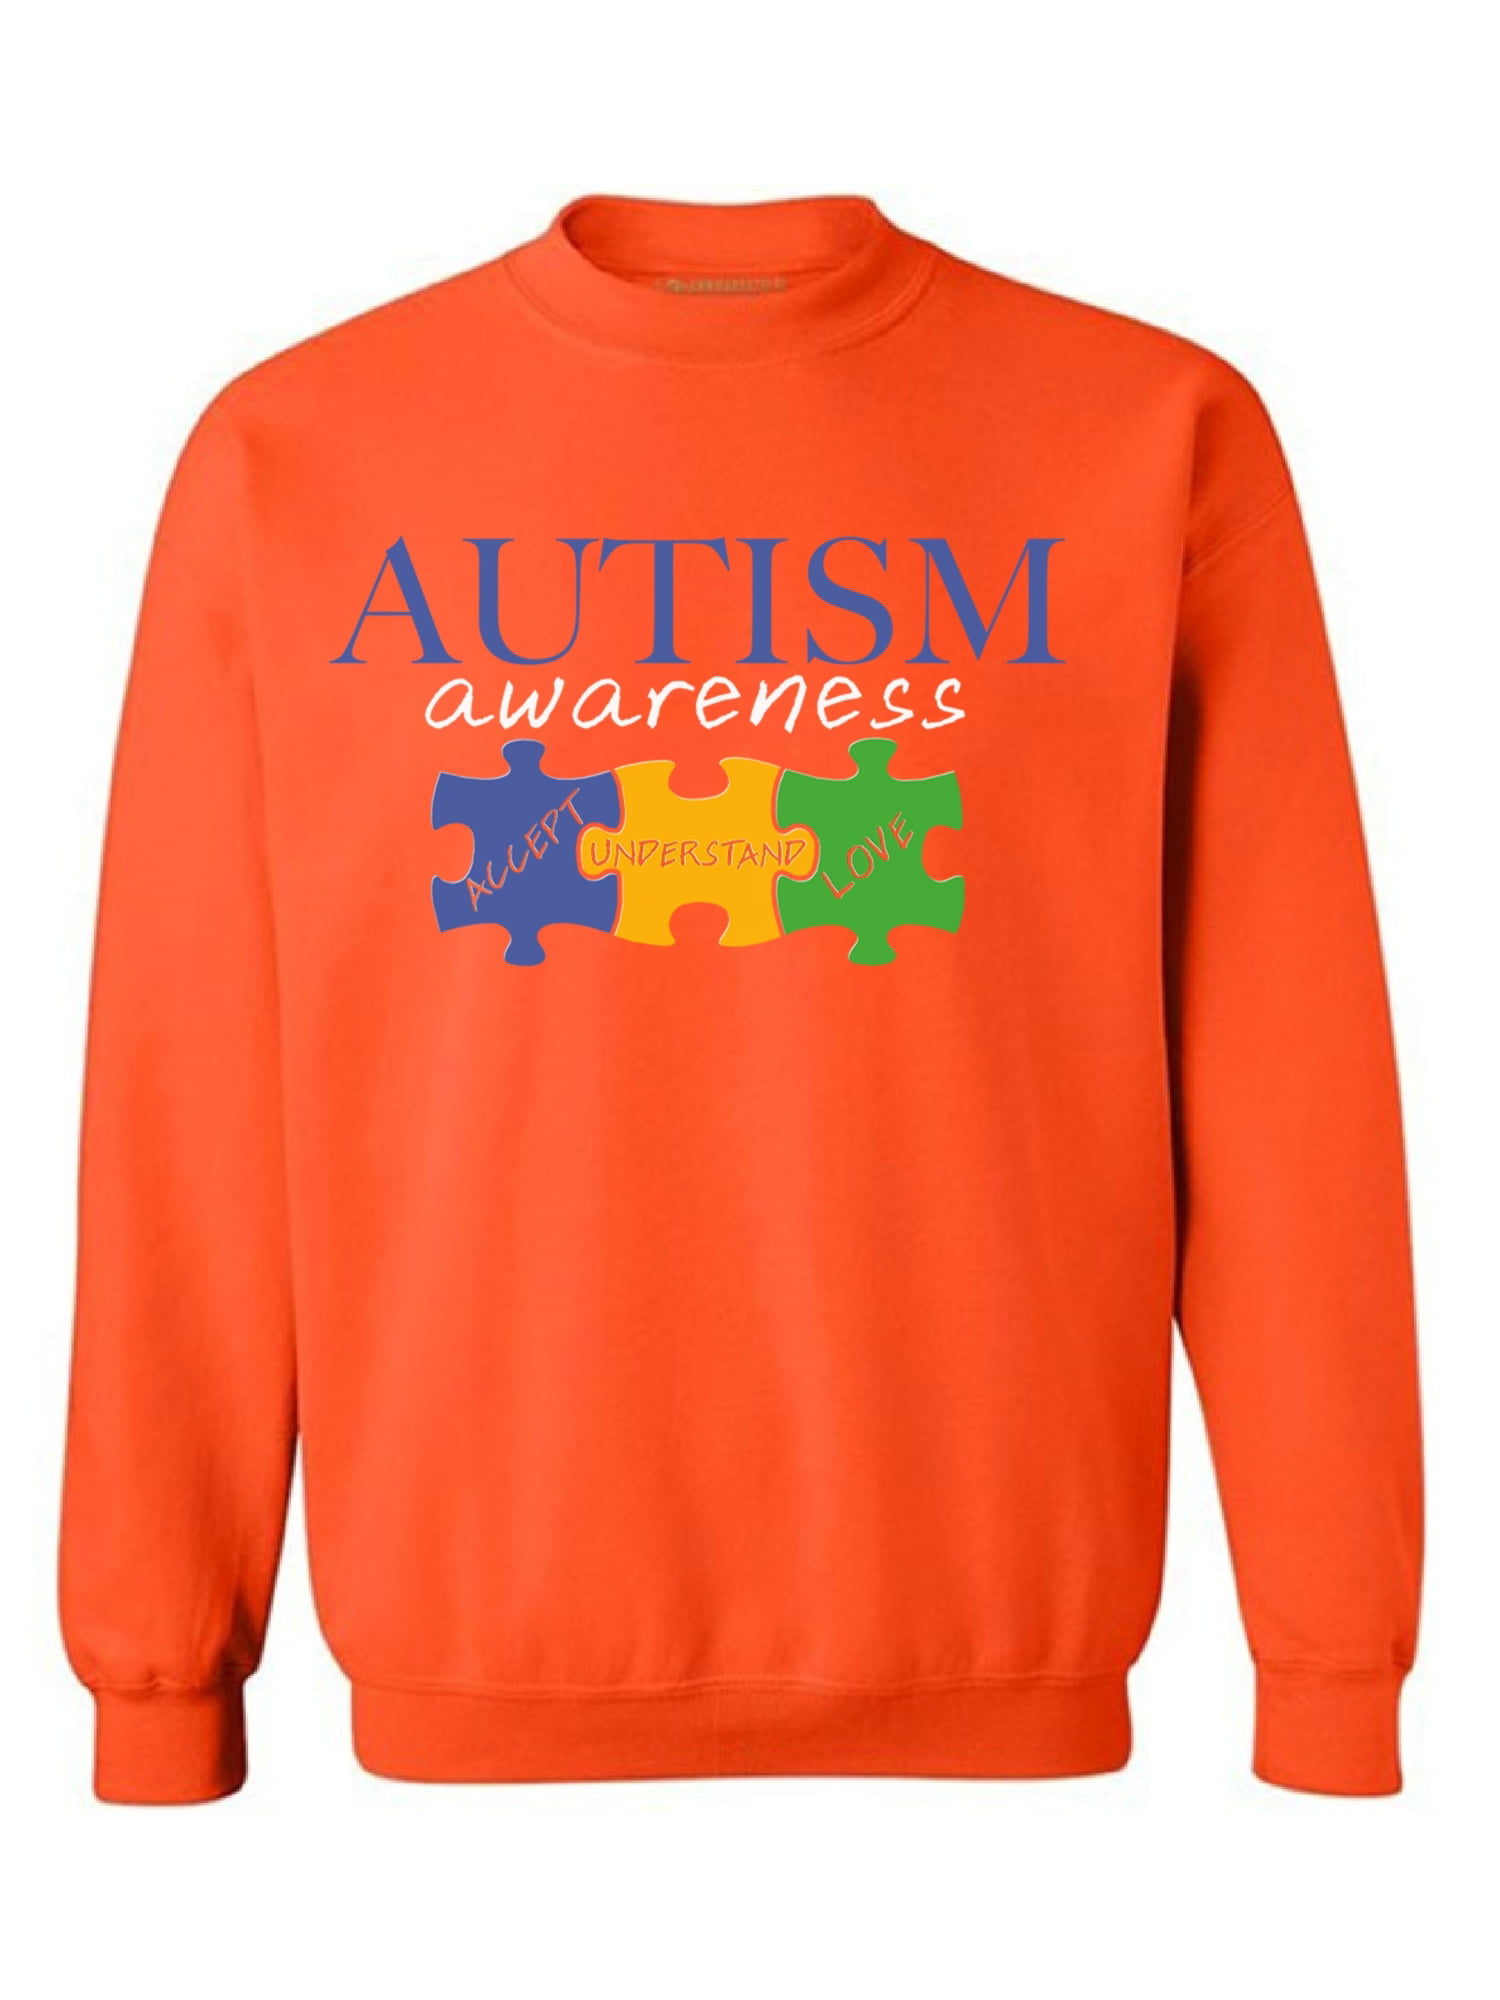 Awkward Styles - Awkward Styles Autism Awareness Sweatshirt Accept ...